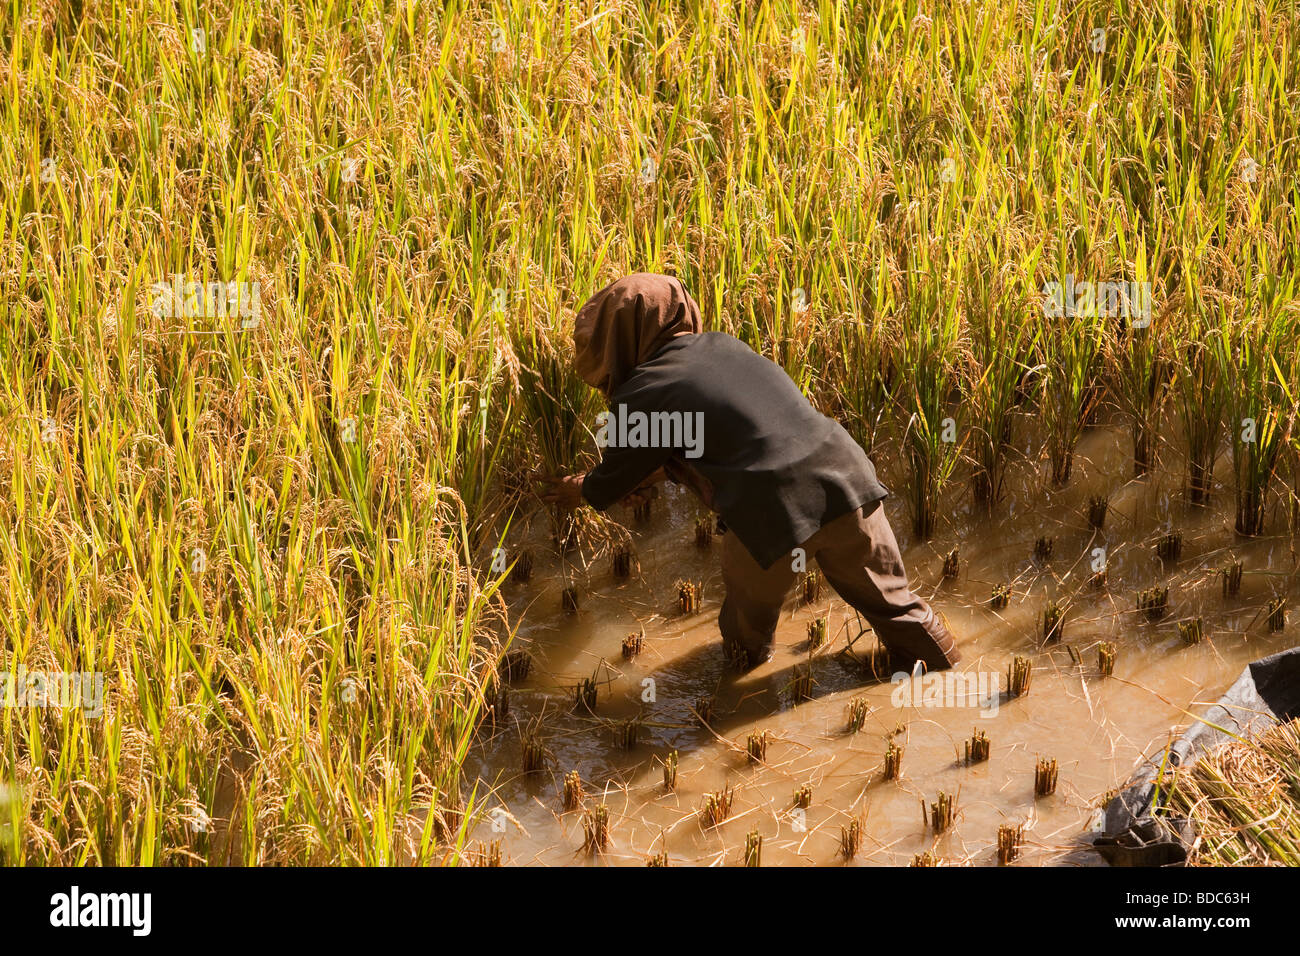 Indonesia Sulawesi Tana Toraja Londa village woman harvesting field of rice alone Stock Photo